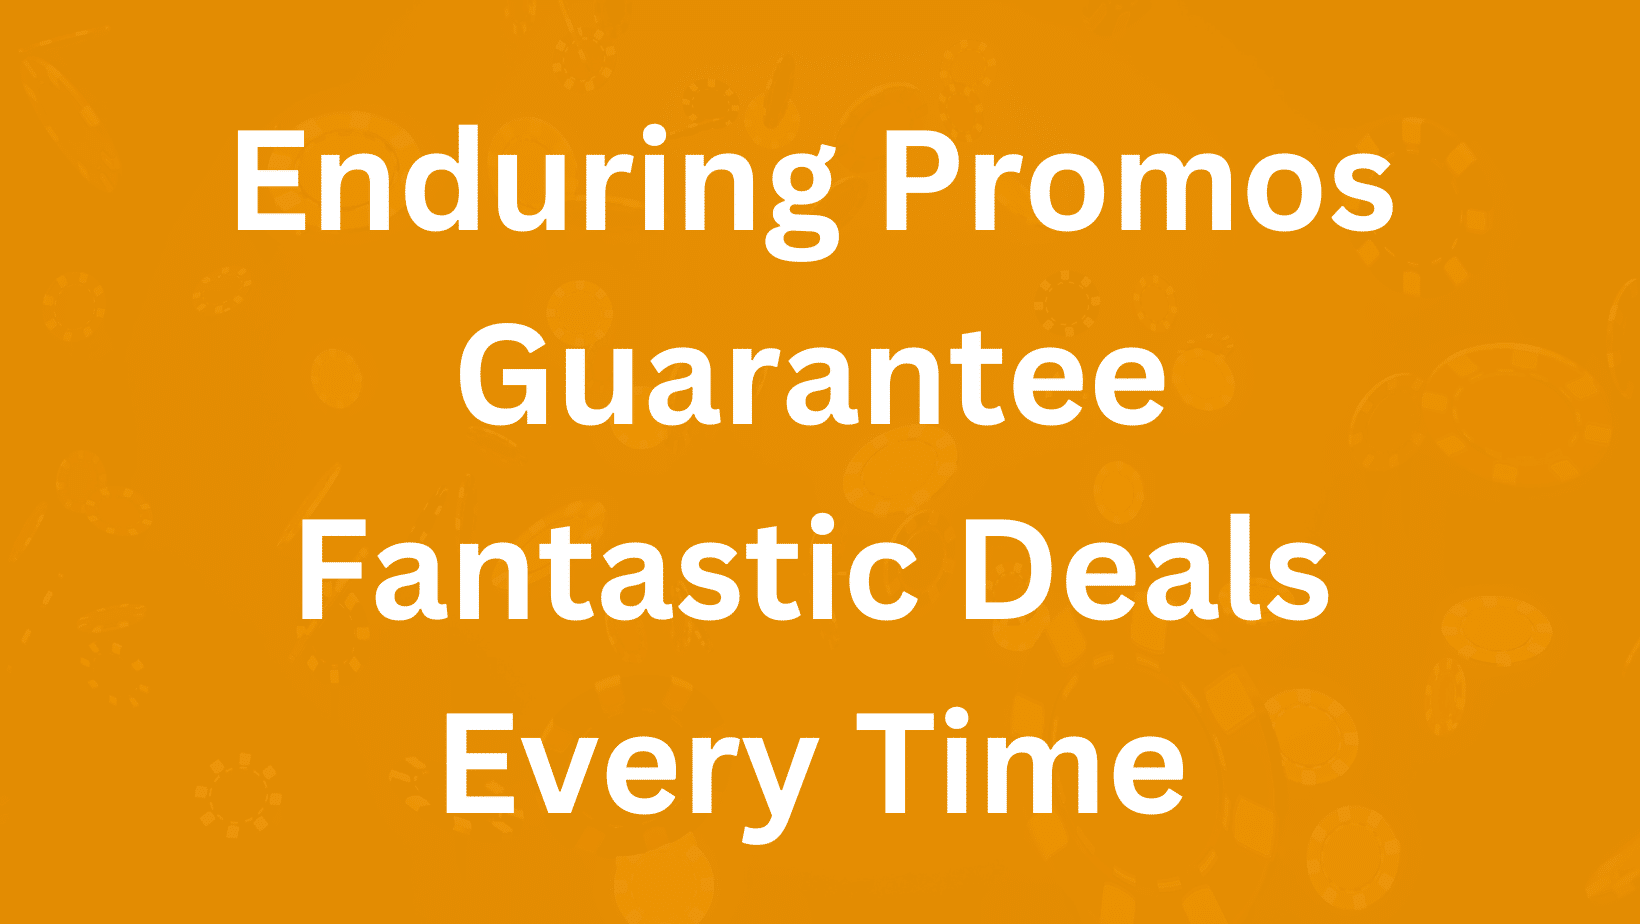 Enduring Promos Guarantee Fantastic Deals Every Time